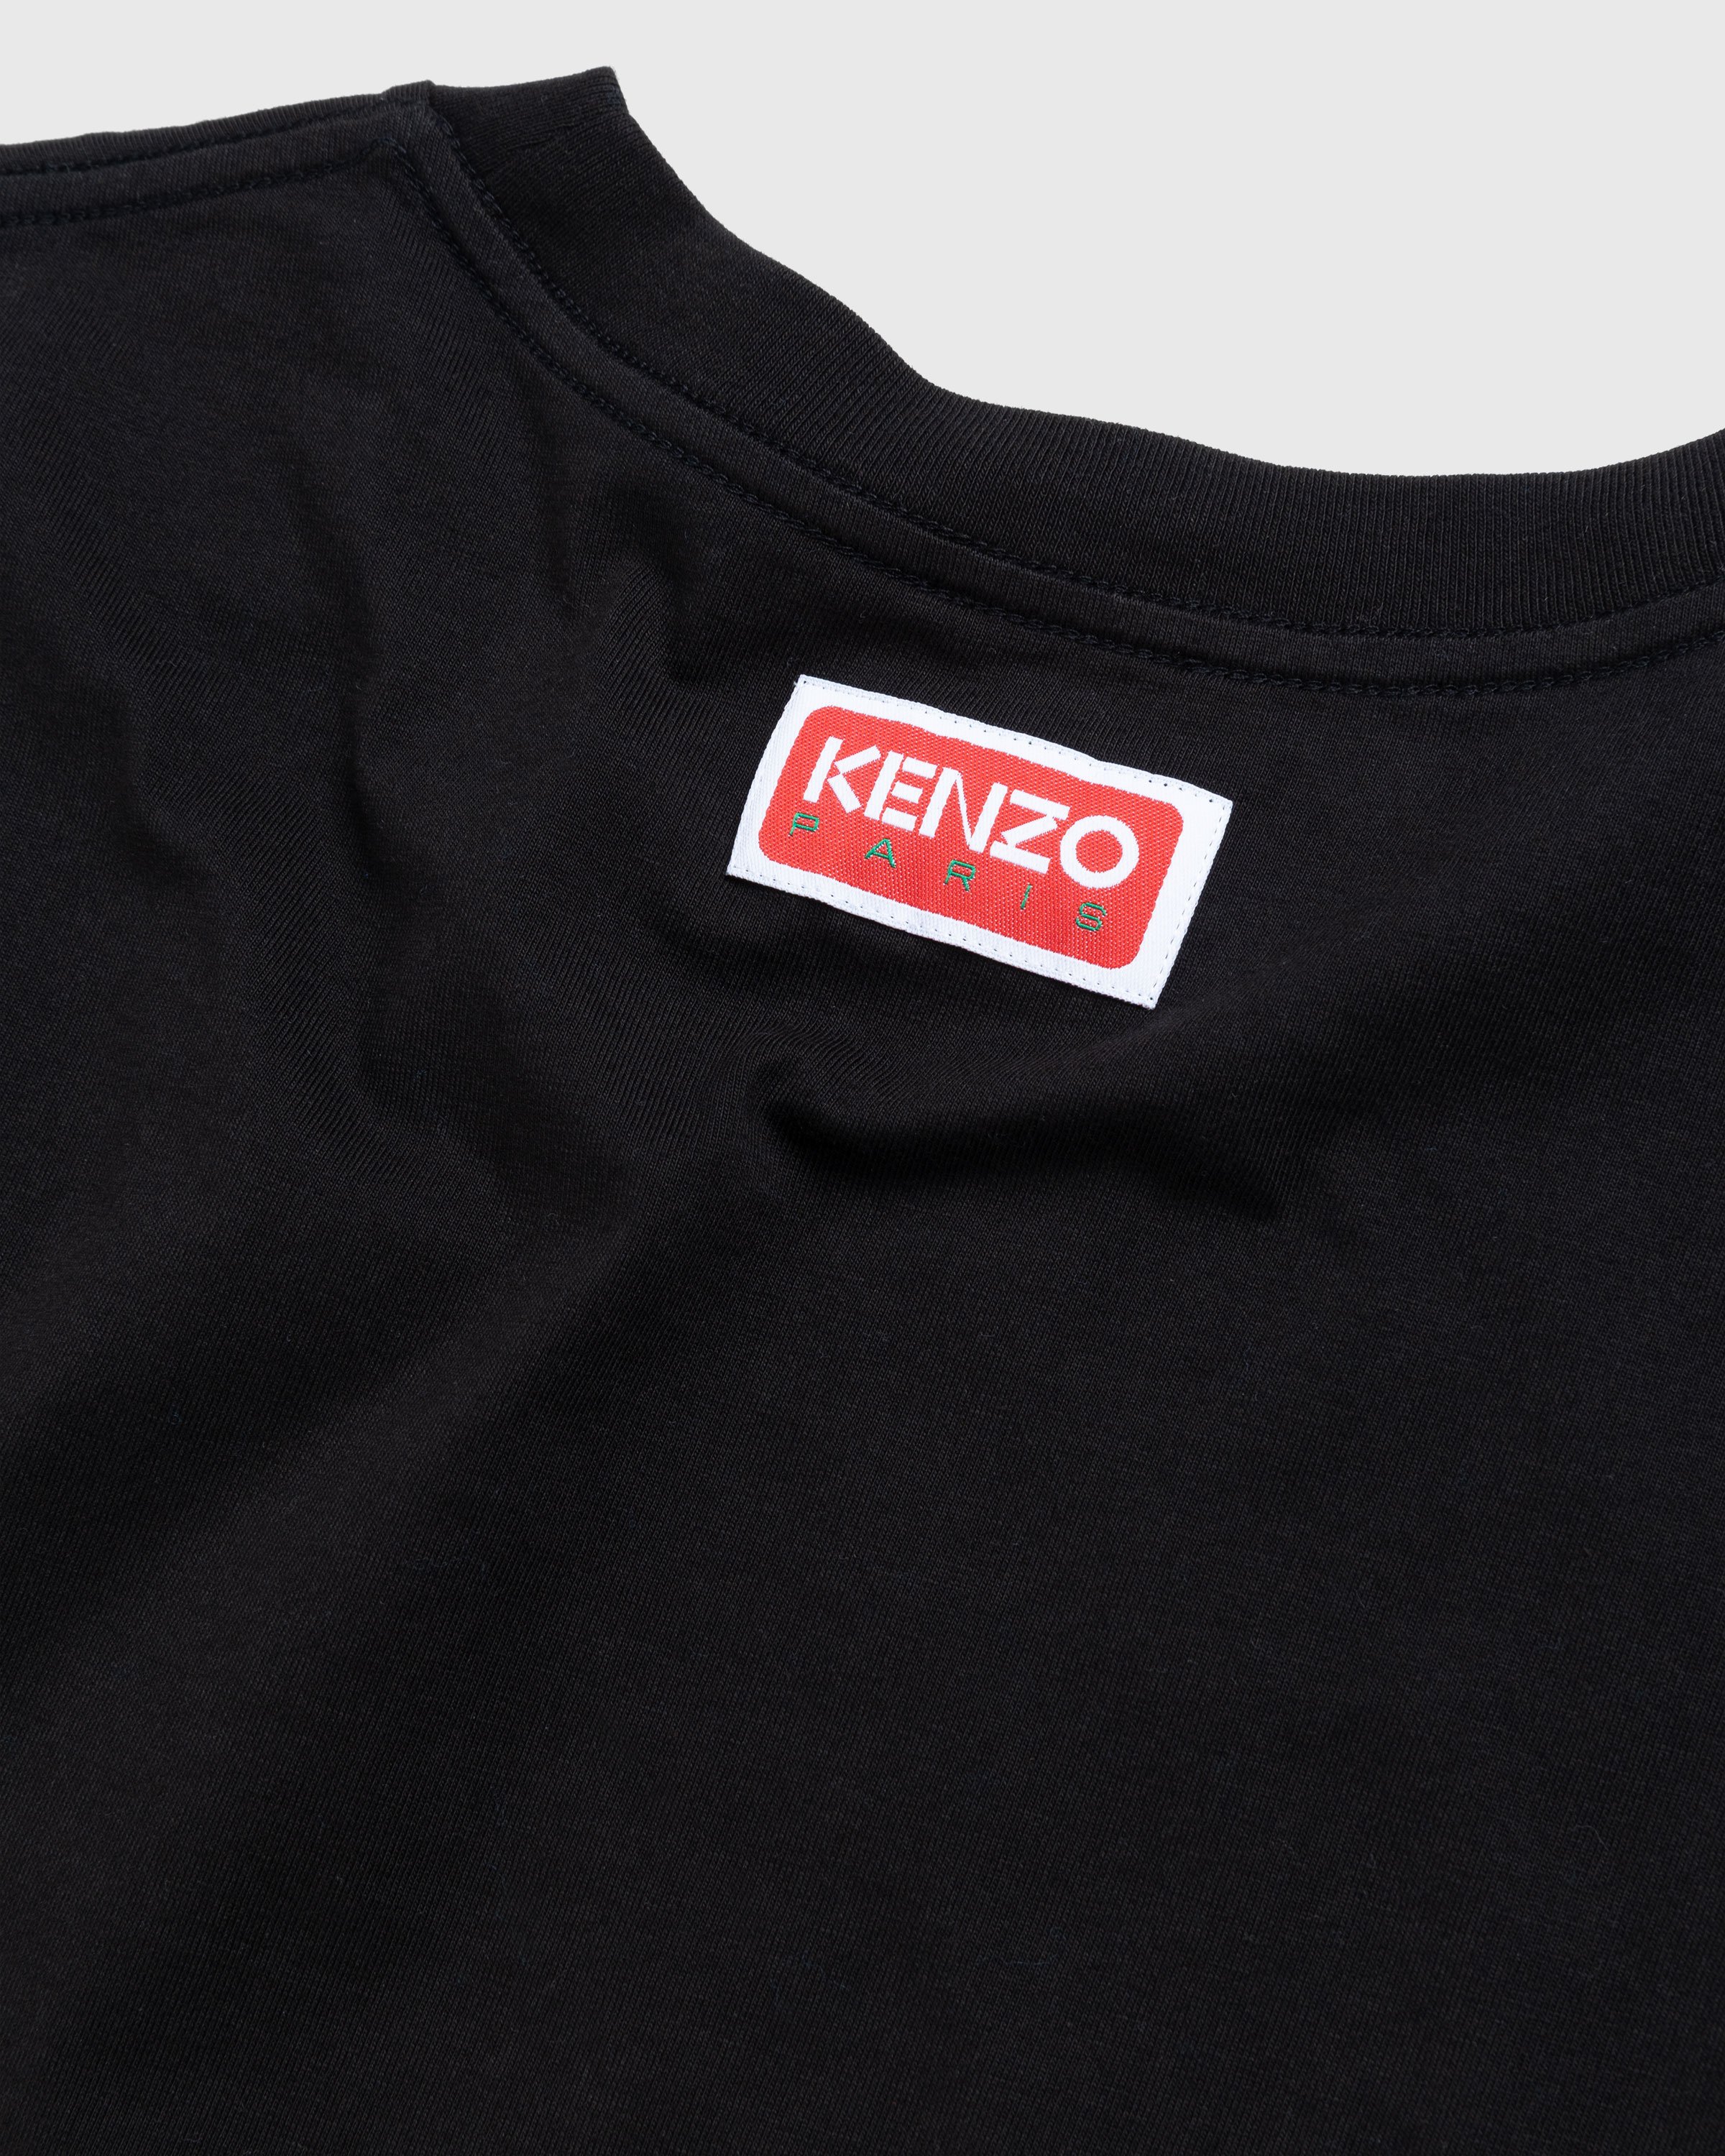 Kenzo - Boke Flower T-Shirt Black - Clothing - Black - Image 6